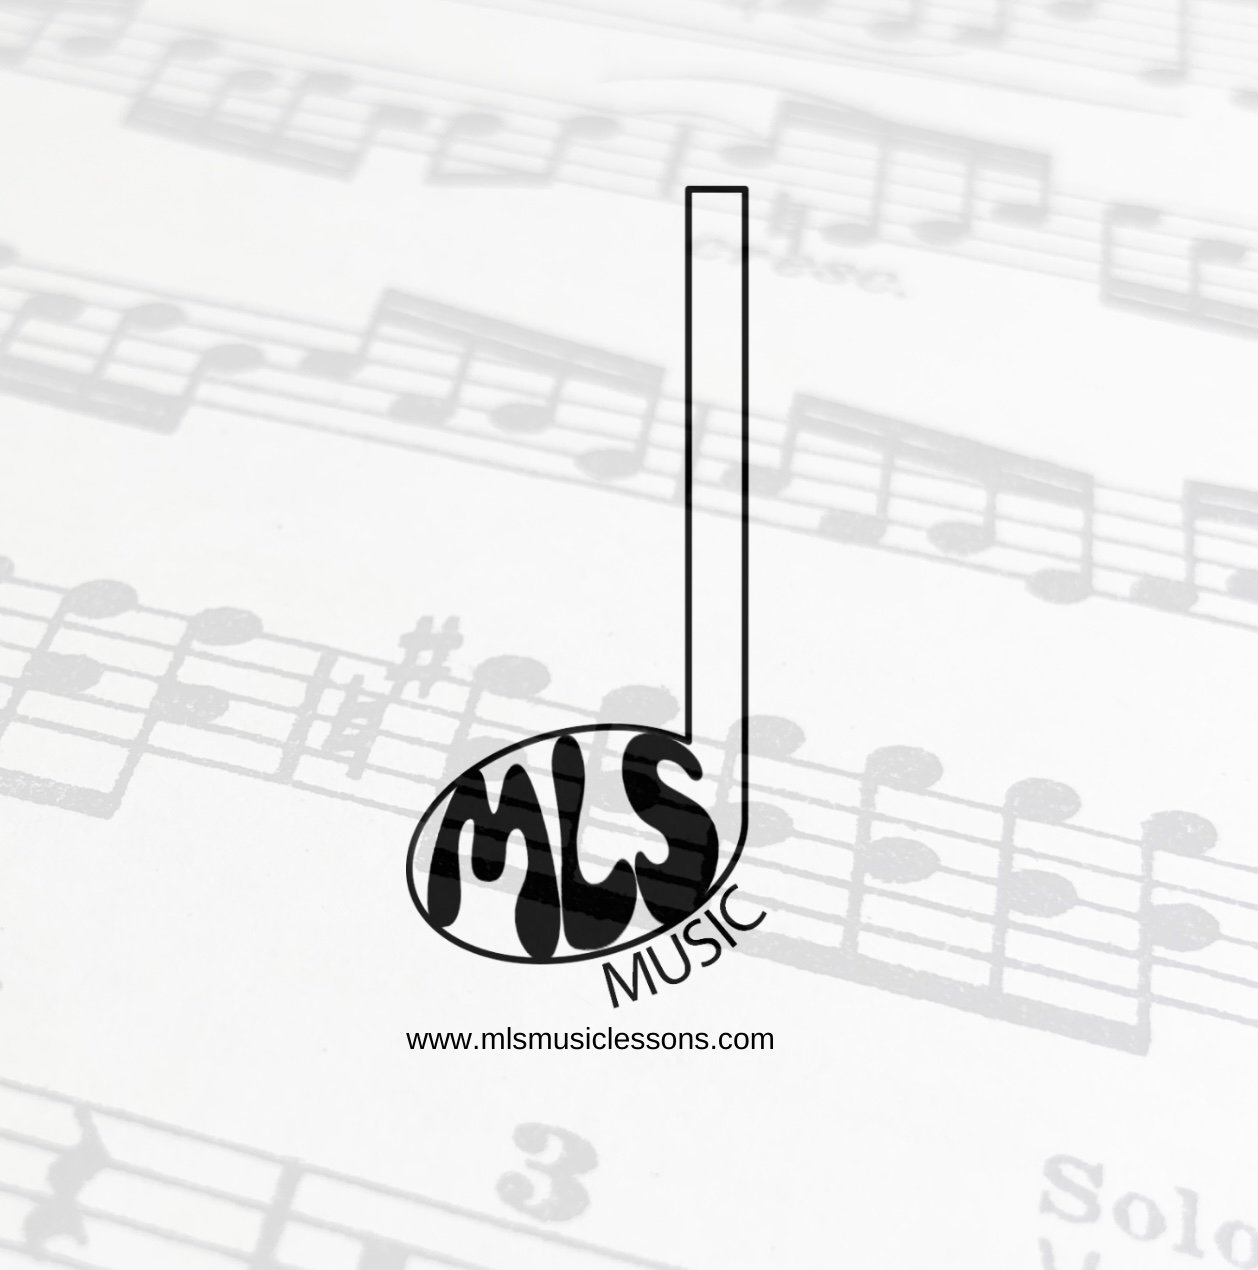 MLS Music Lessons